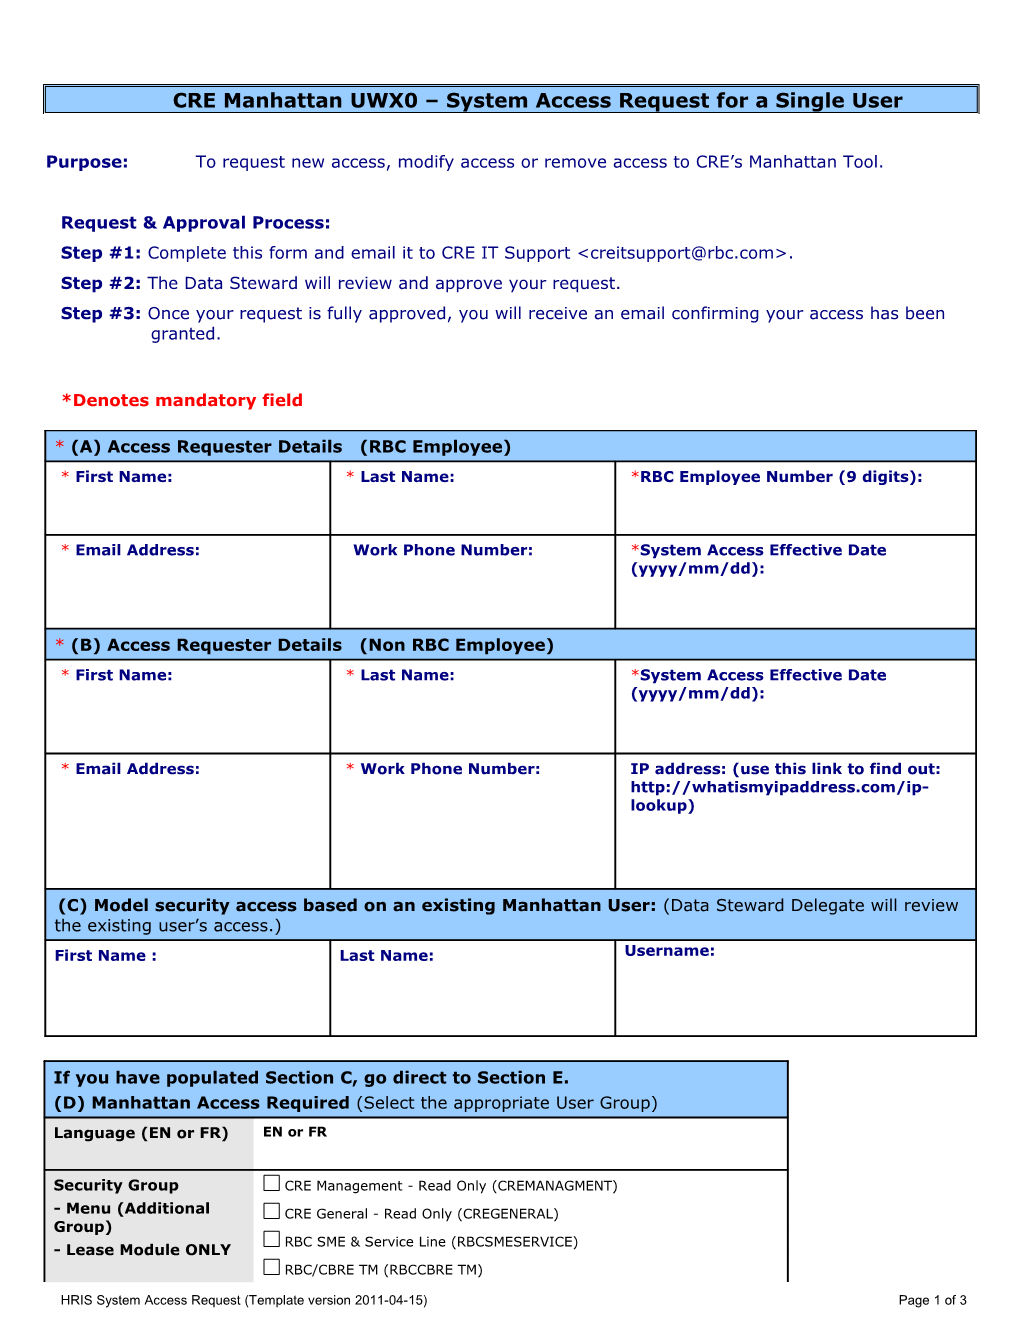 HR Information System (HRIS) System Access Request Form